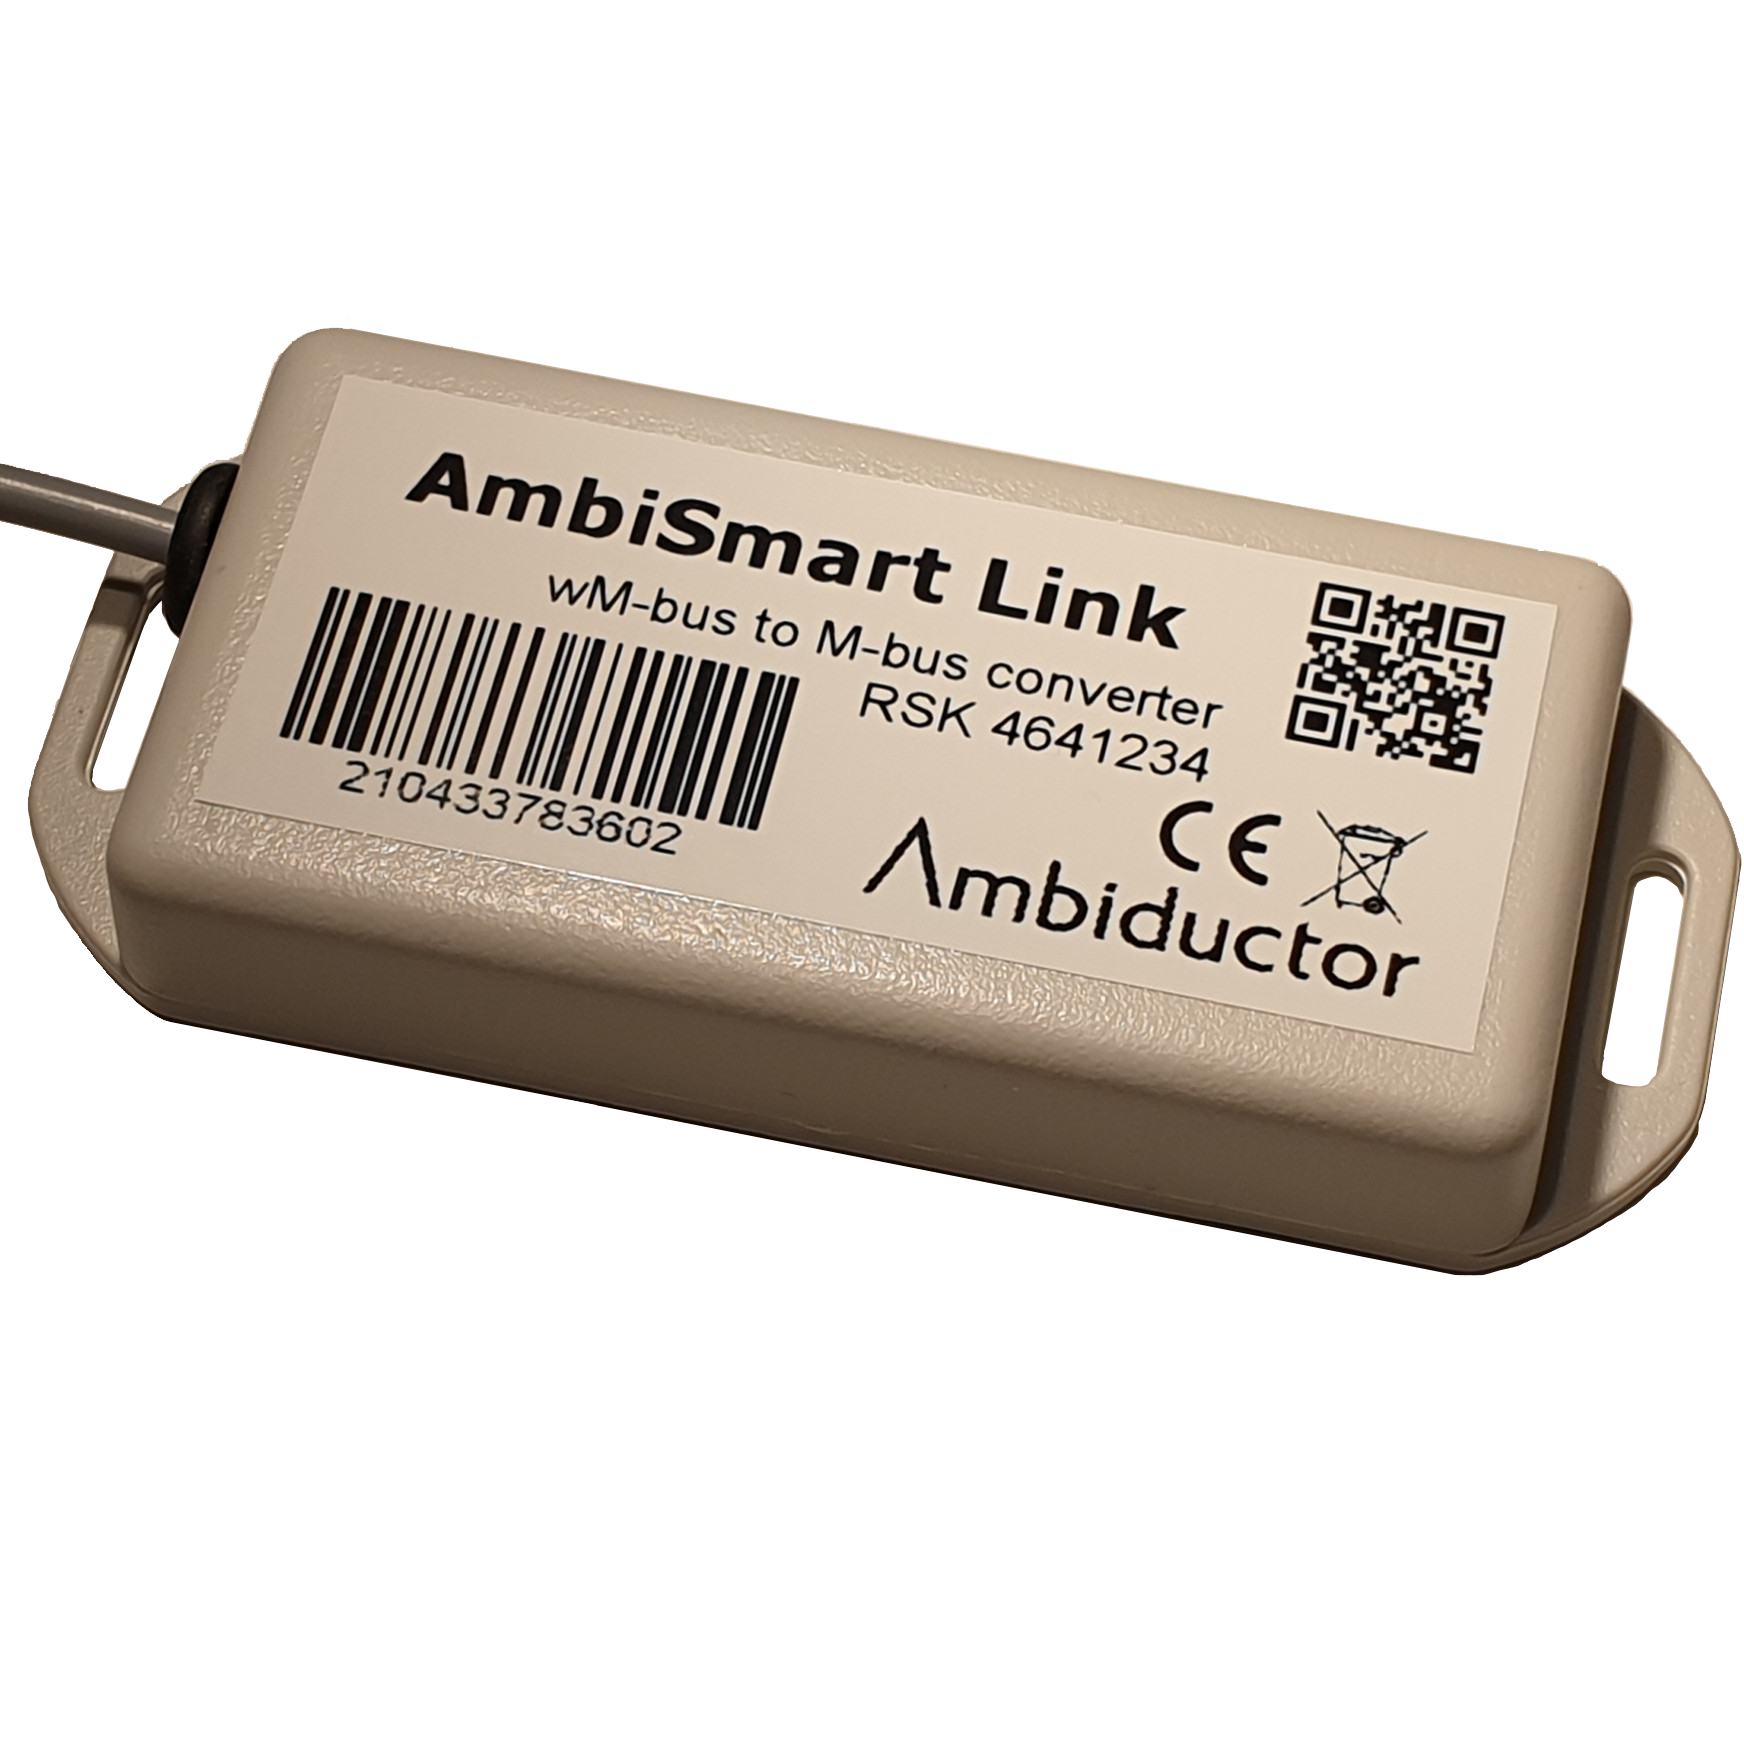 AmbiSmart Link